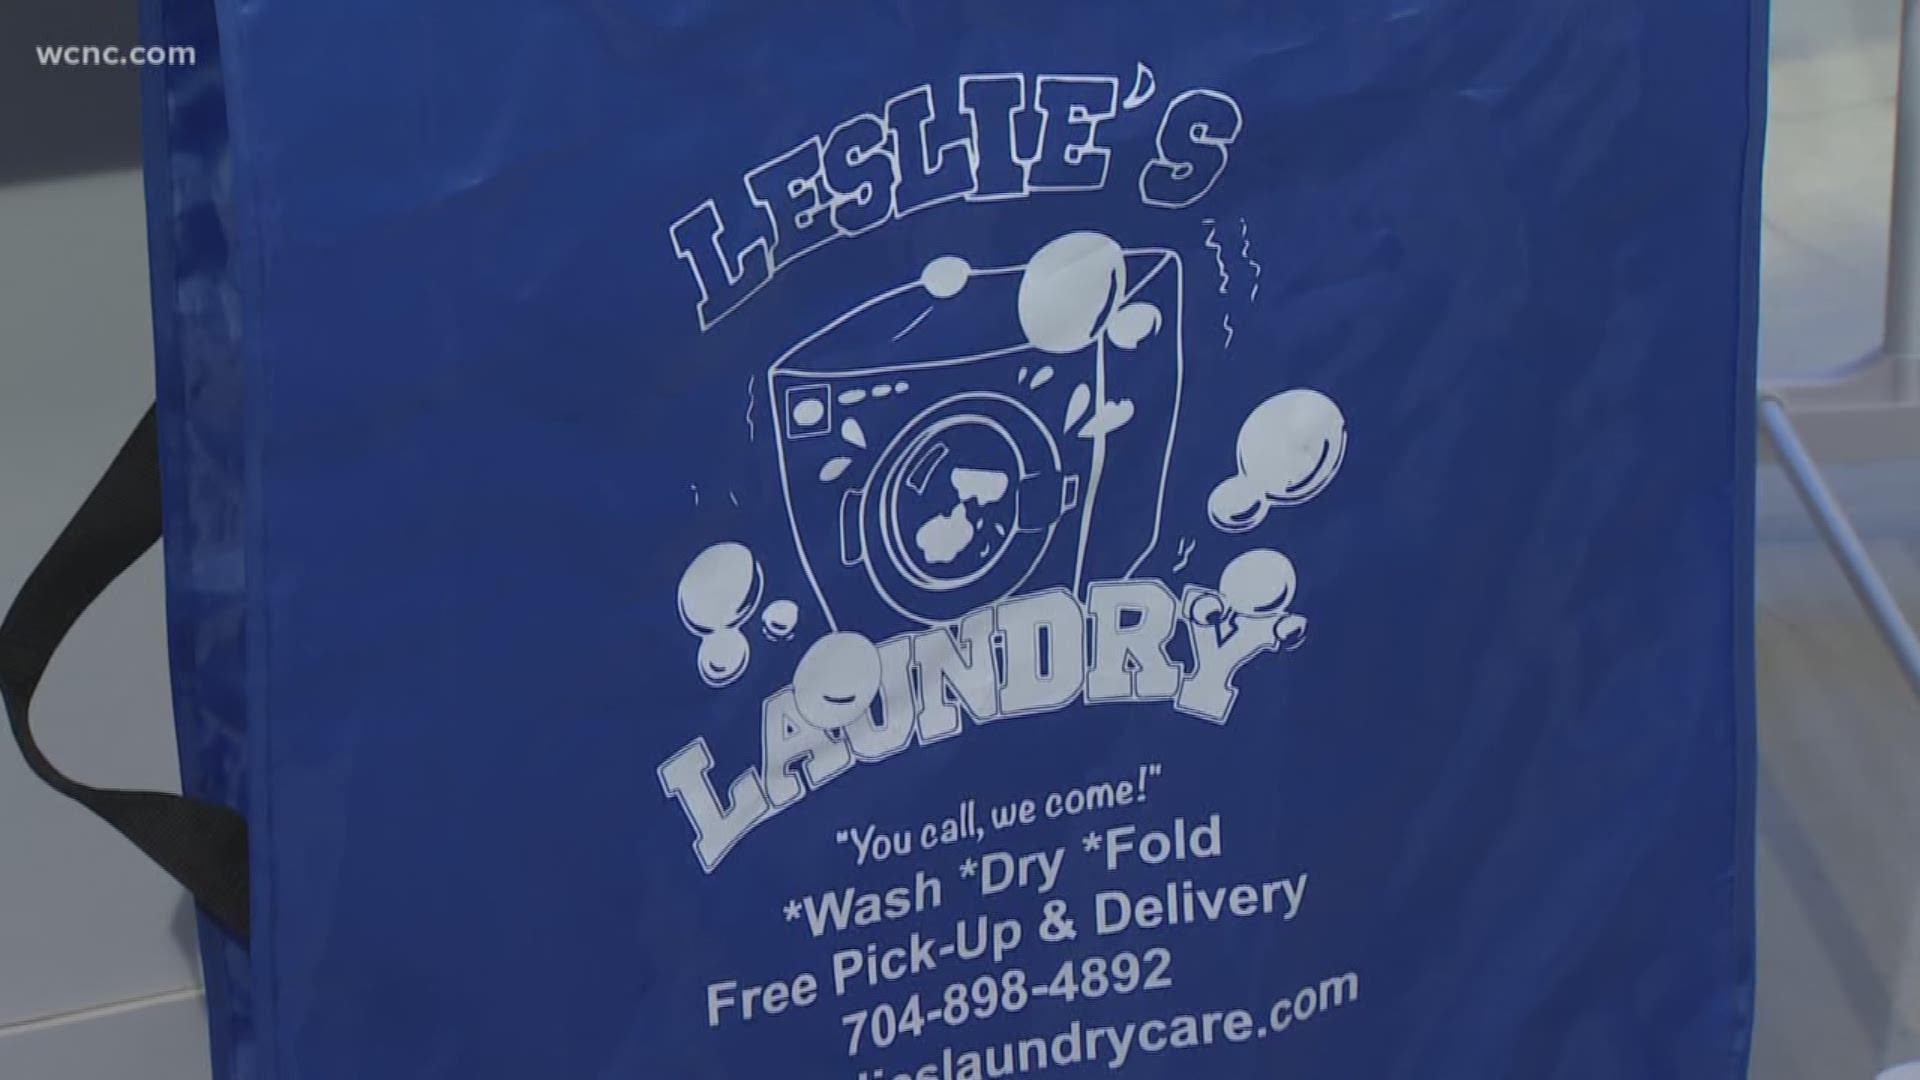 Leslie's Laundry Care704-898-4892www.leslieslaundrycare.com